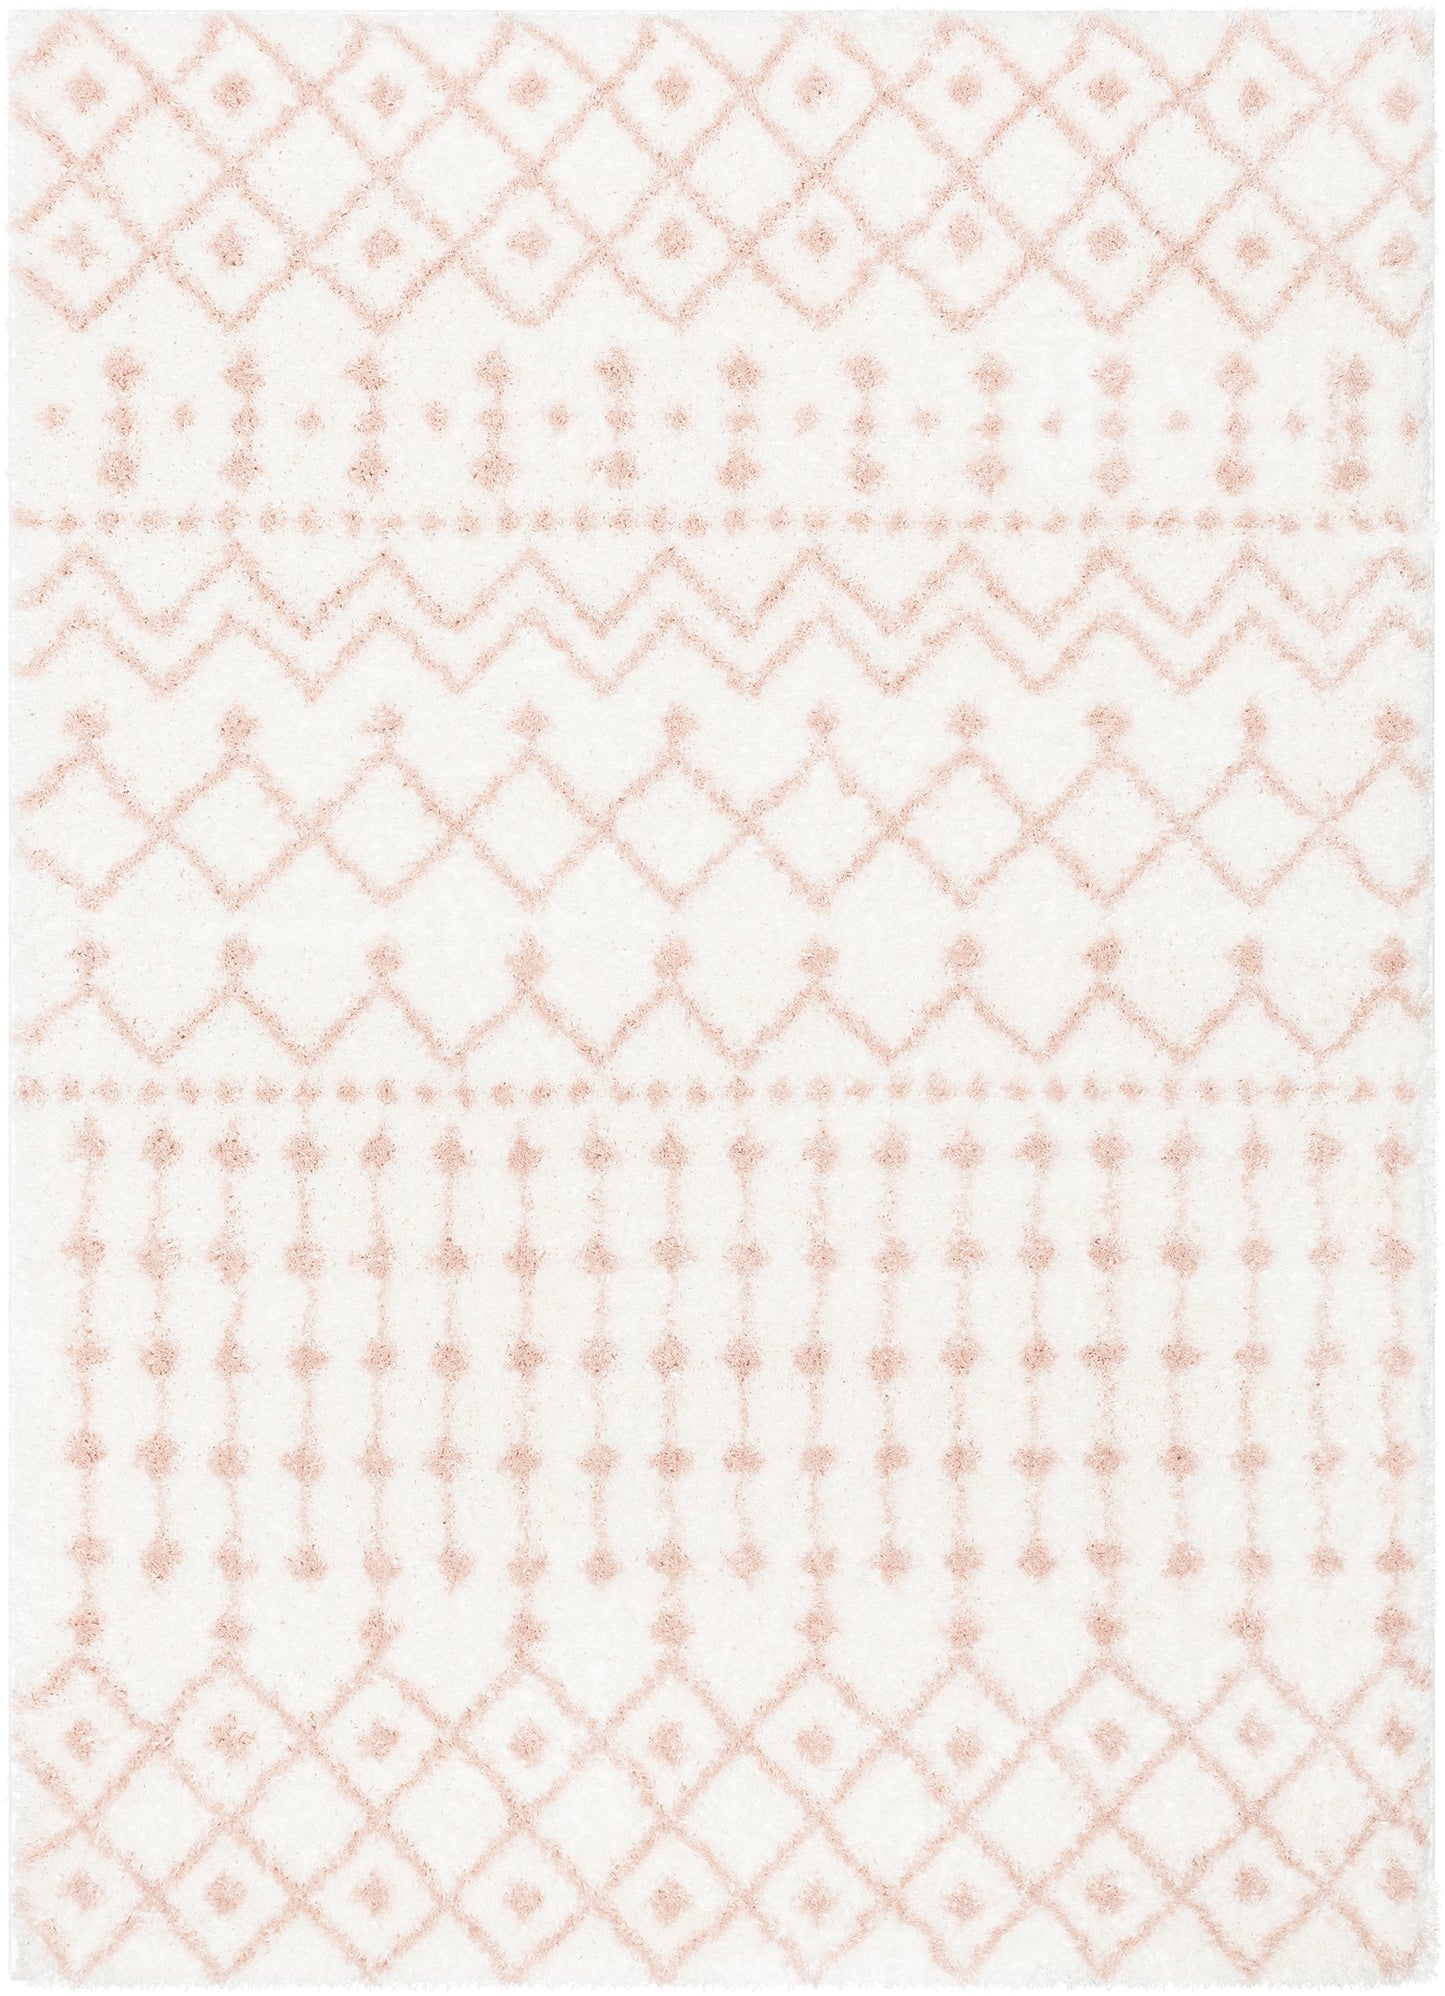 Coimbra Moroccan Diamond Pattern Blush Thick & Soft Shag Rug CE-29